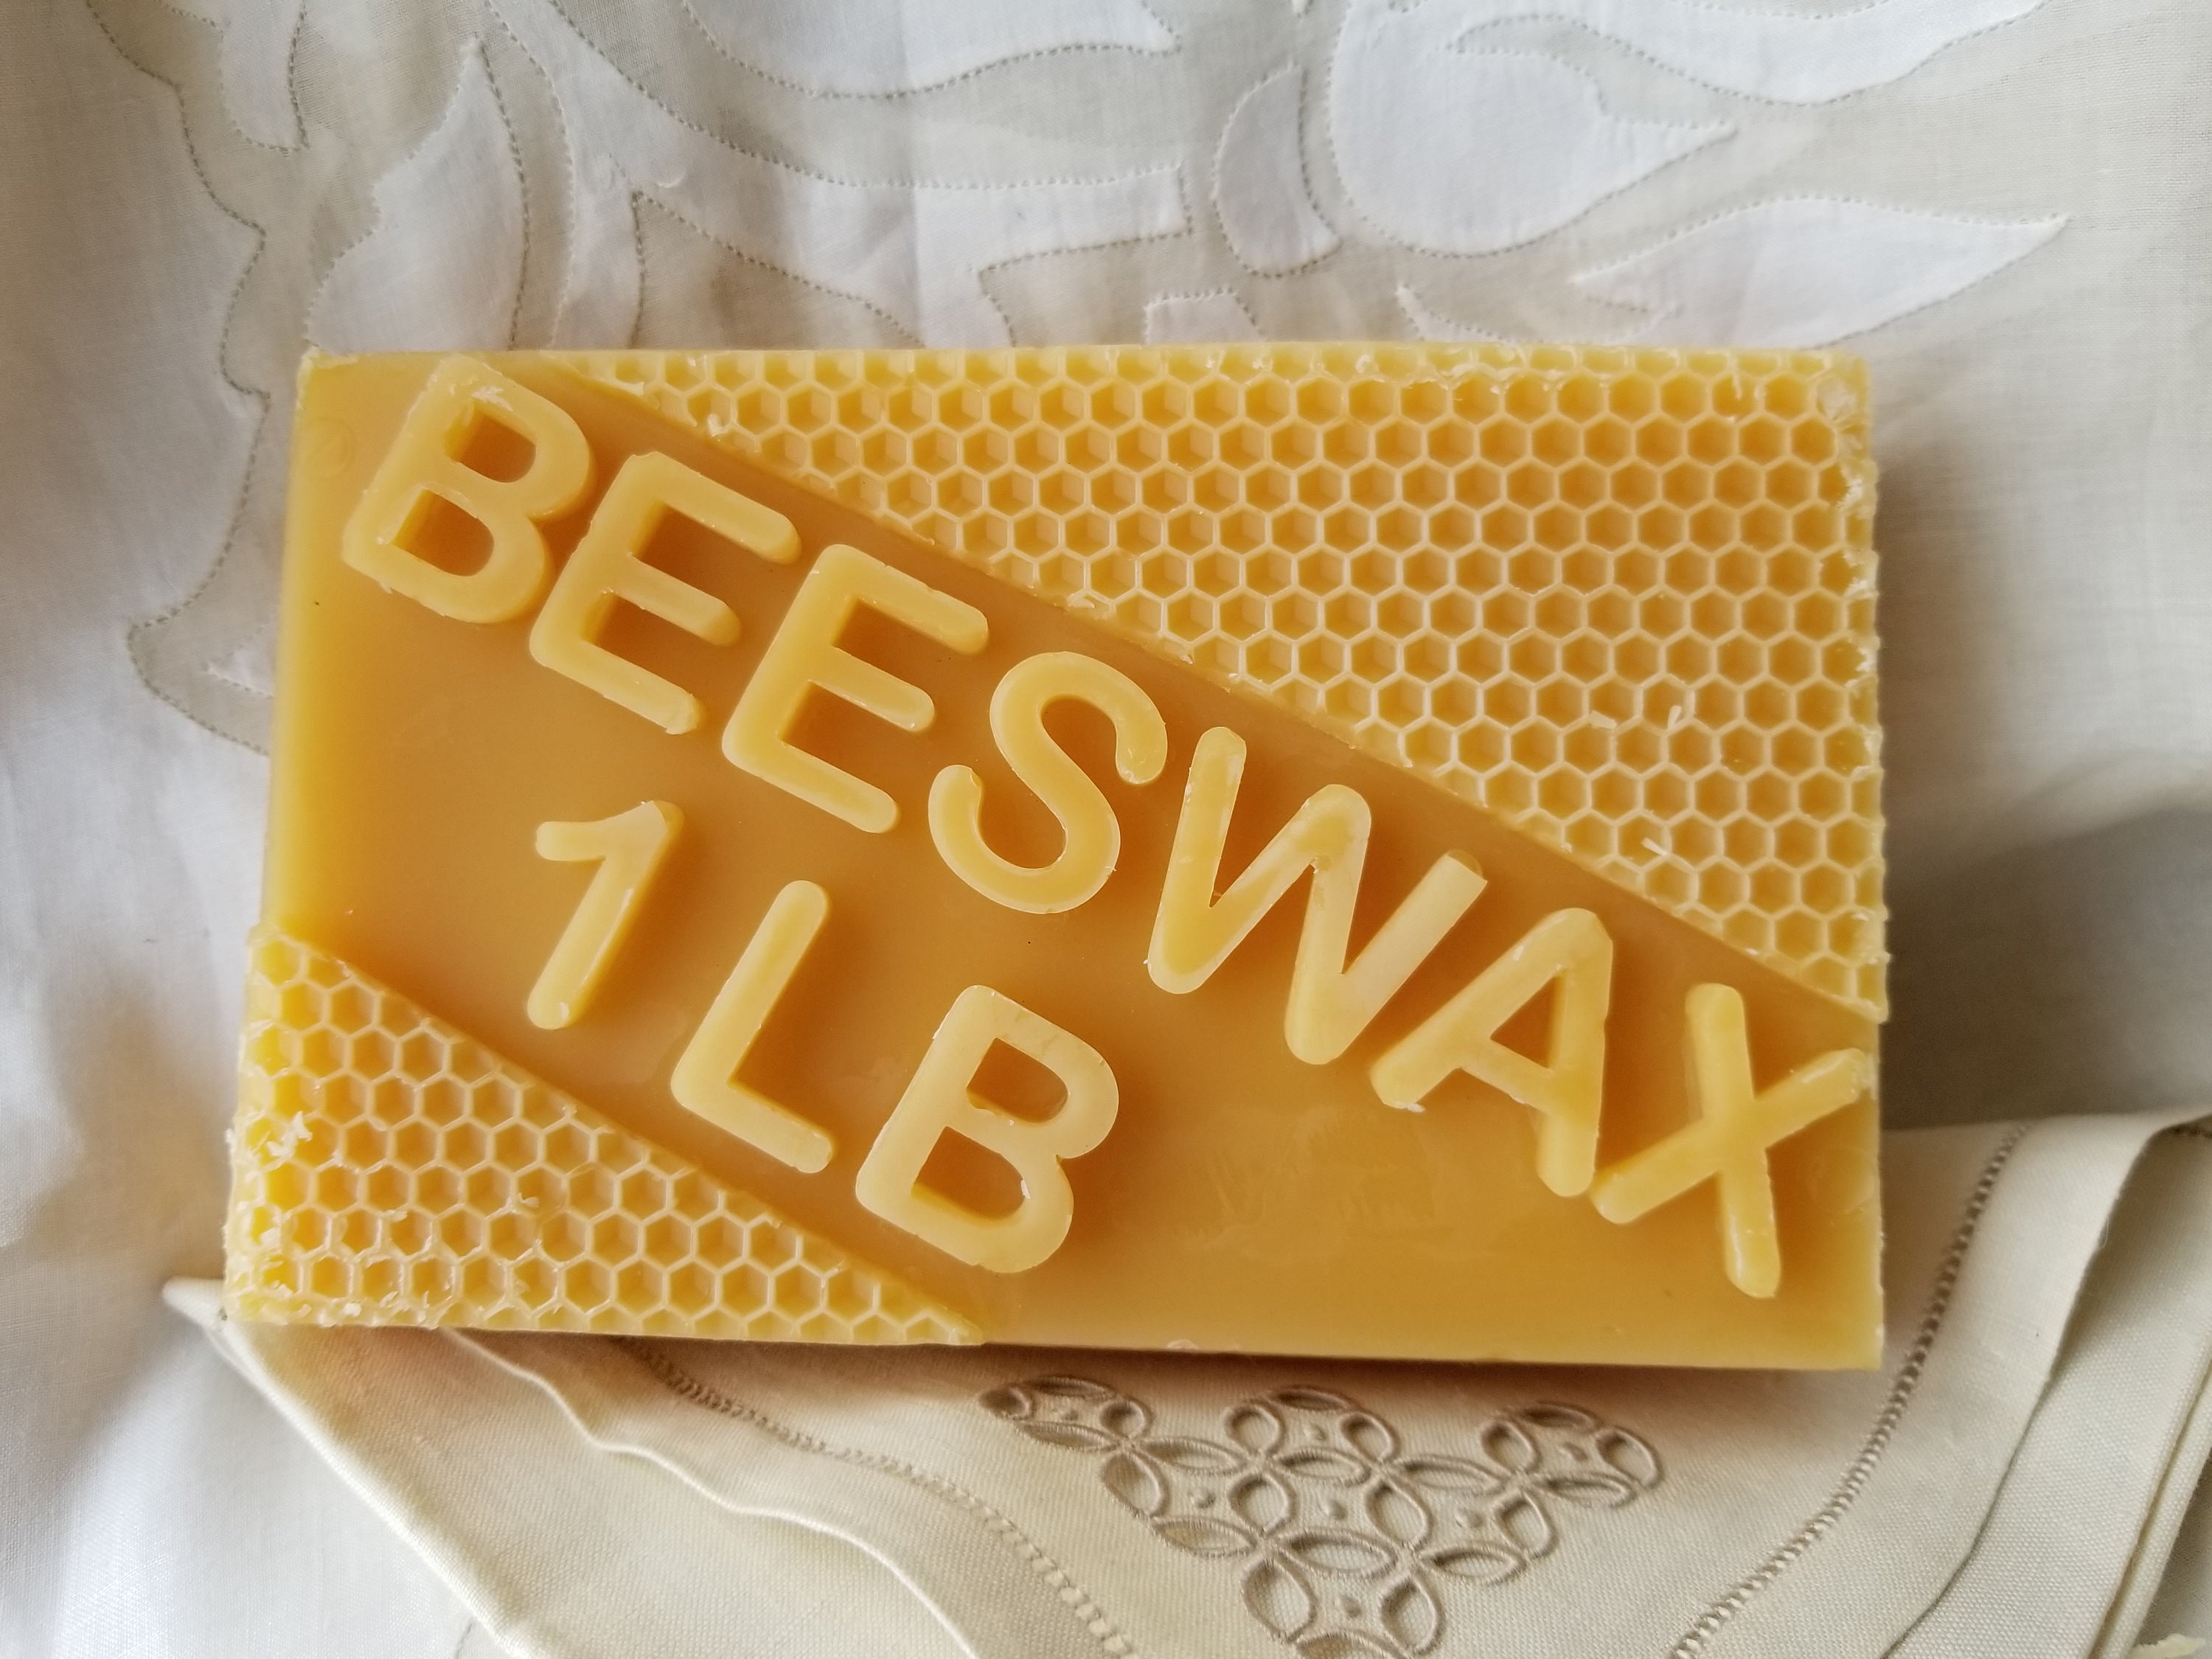 Raw Bulk Beeswax - 1 lb